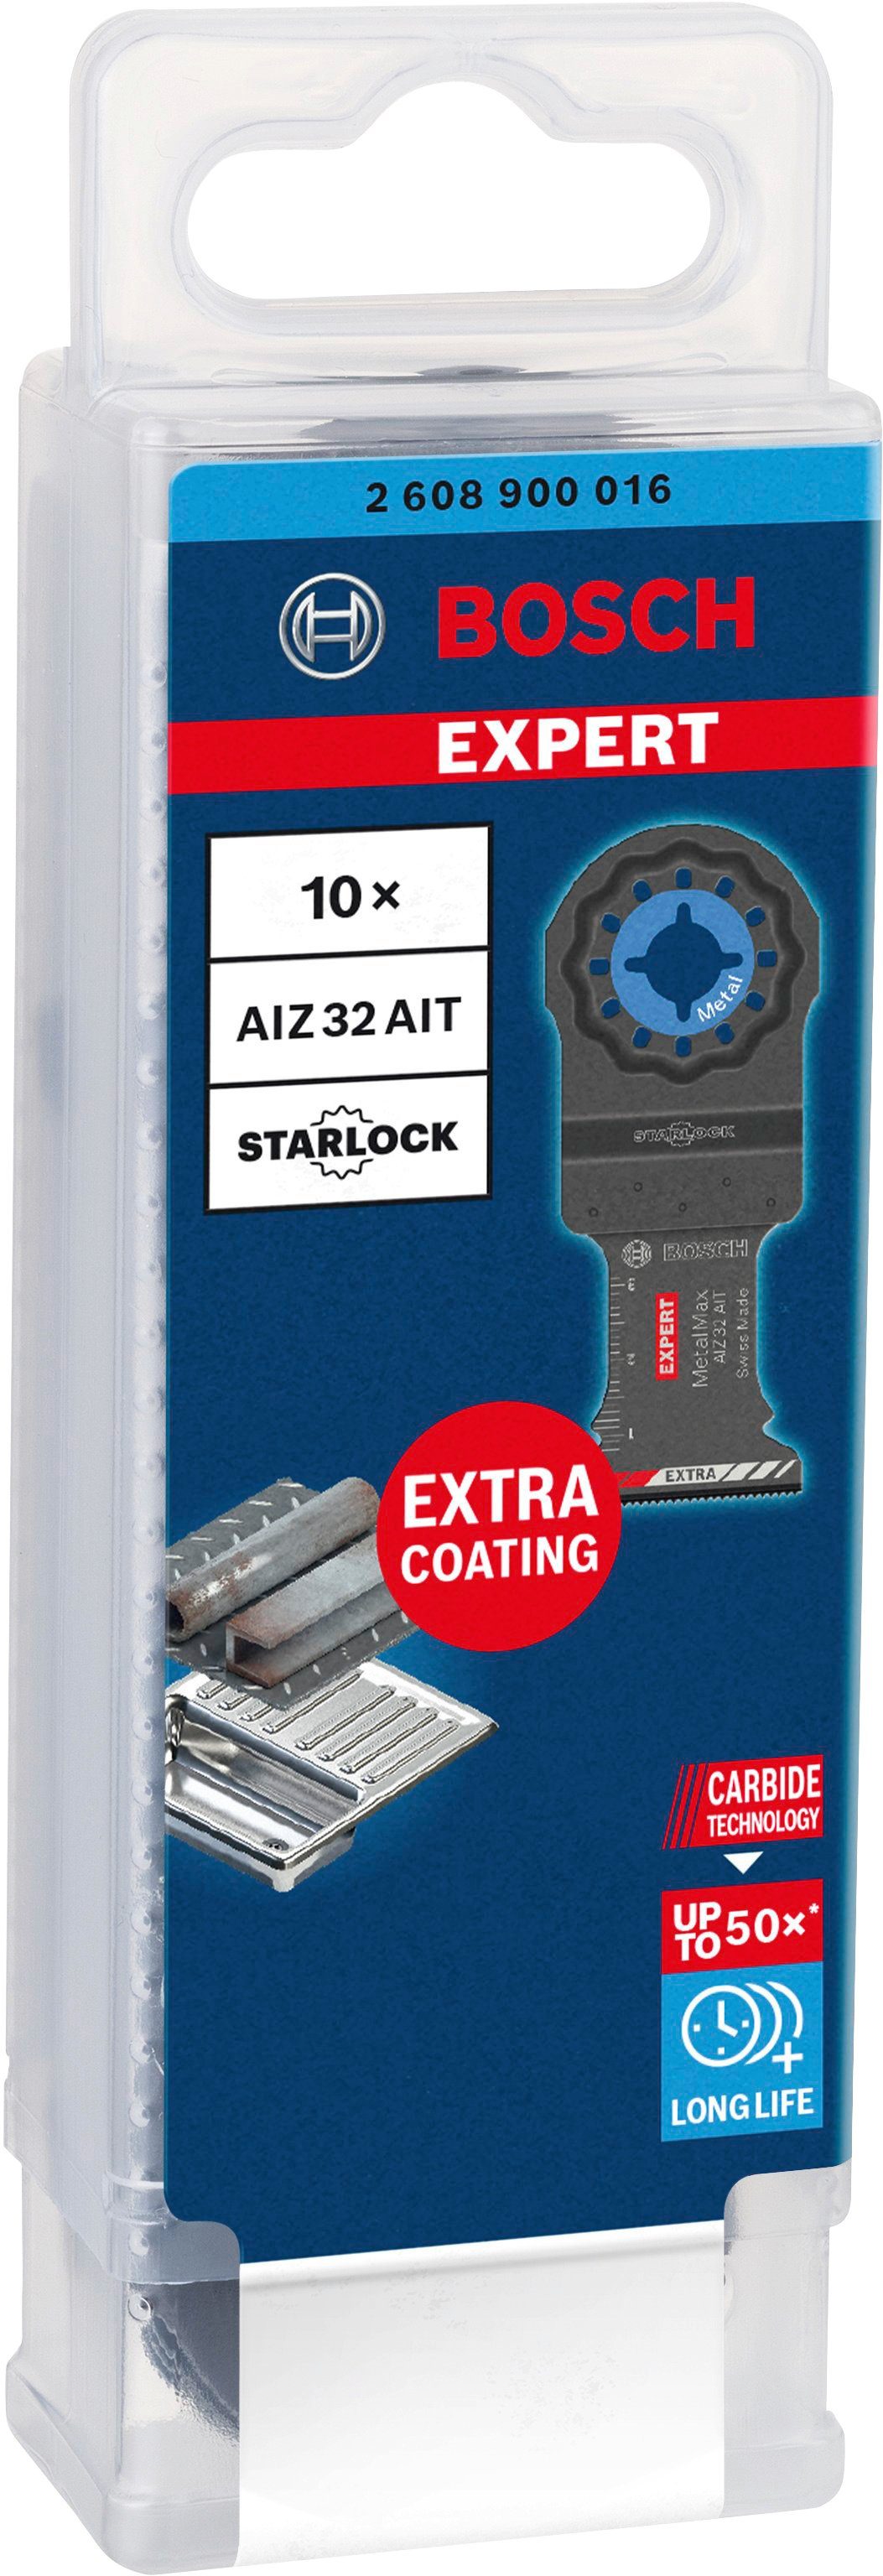 AIZ AIT Sägeblatt für MetalMax Professional EXPERT 40 32 mm, x 10-St), Bosch (Set, 32 Multifunktionswerkzeuge